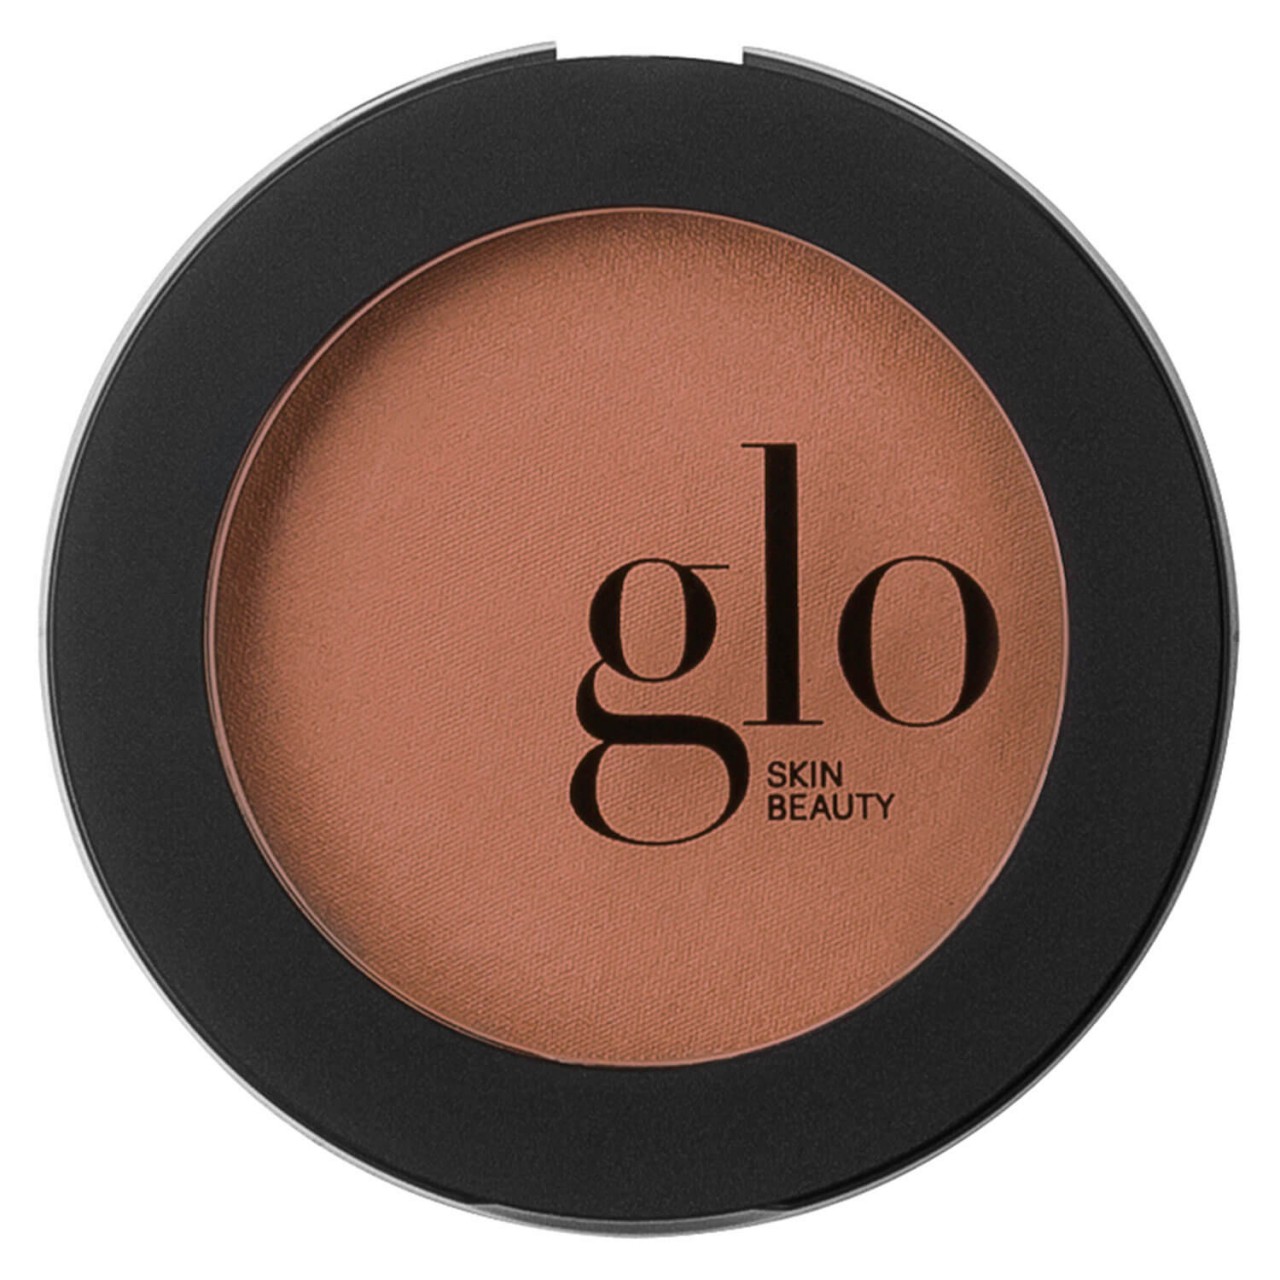 Glo Skin Beauty Blush - Blush Sandalwood von Glo Skin Beauty